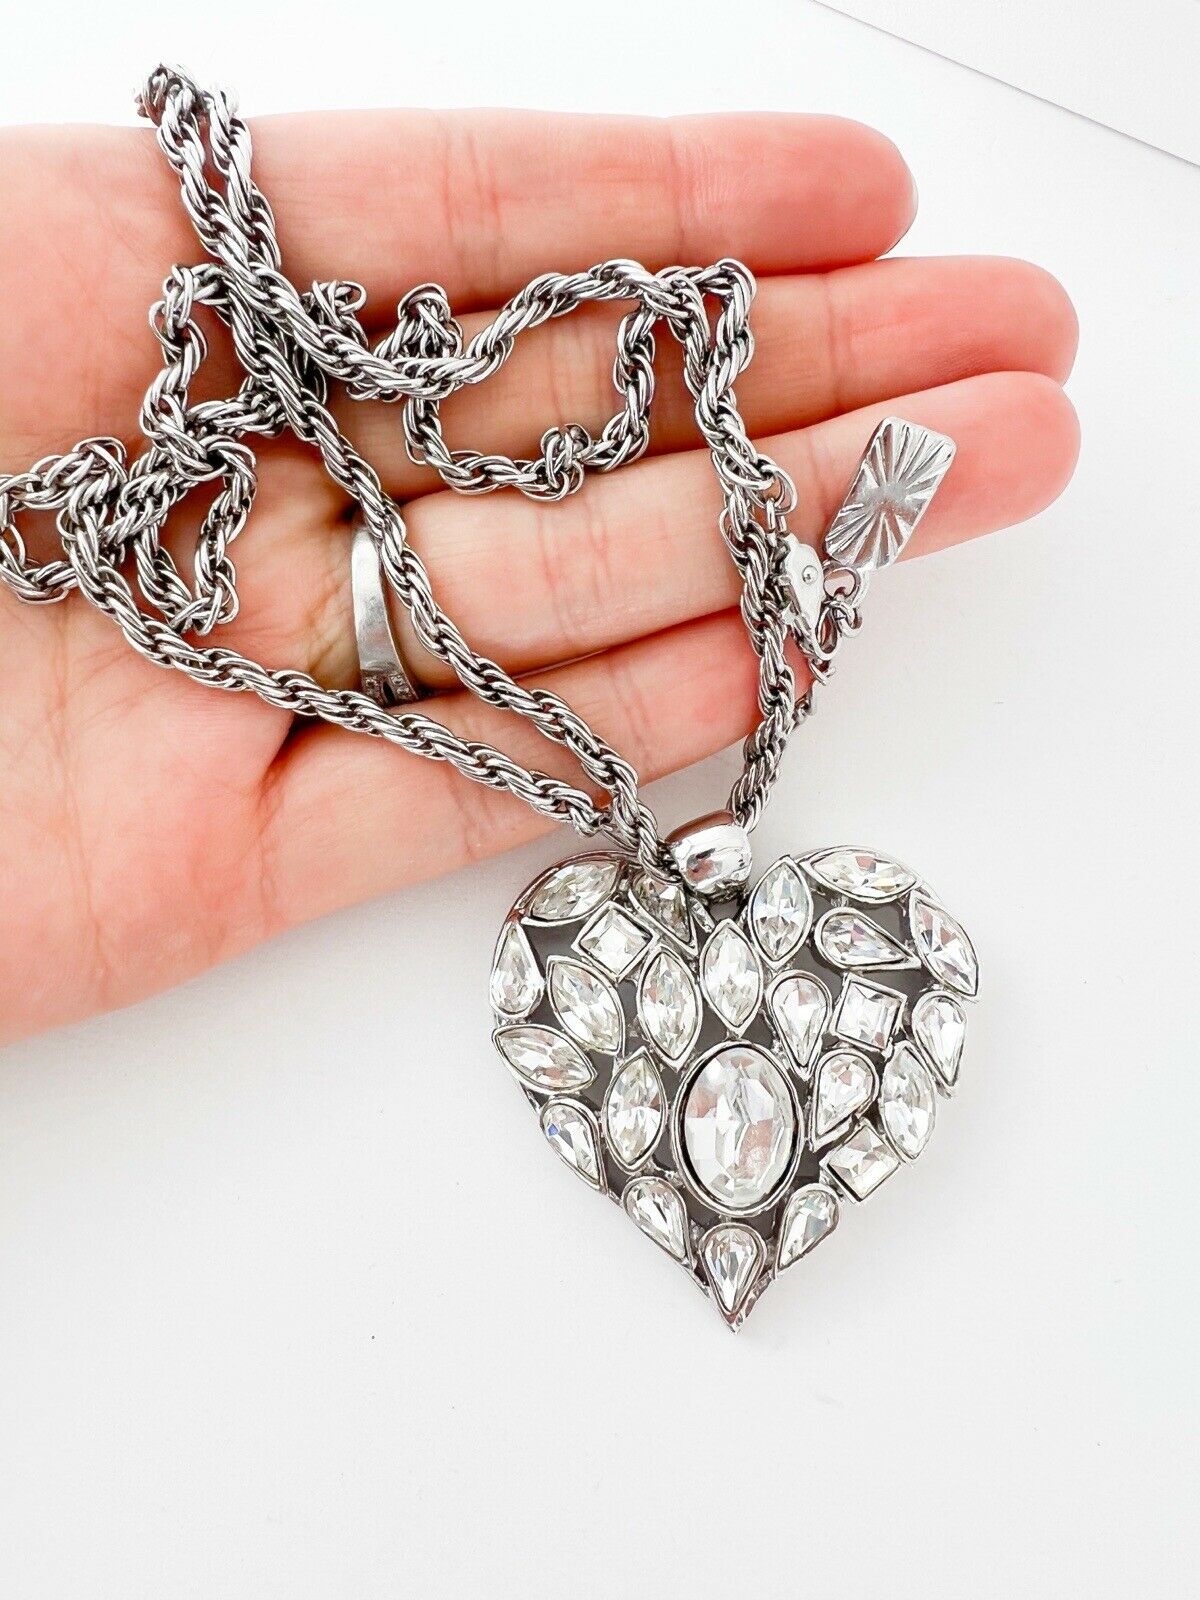 YSL Yves Saint Laurent Vintage Necklace Pendant Silver Heart Rhinestone